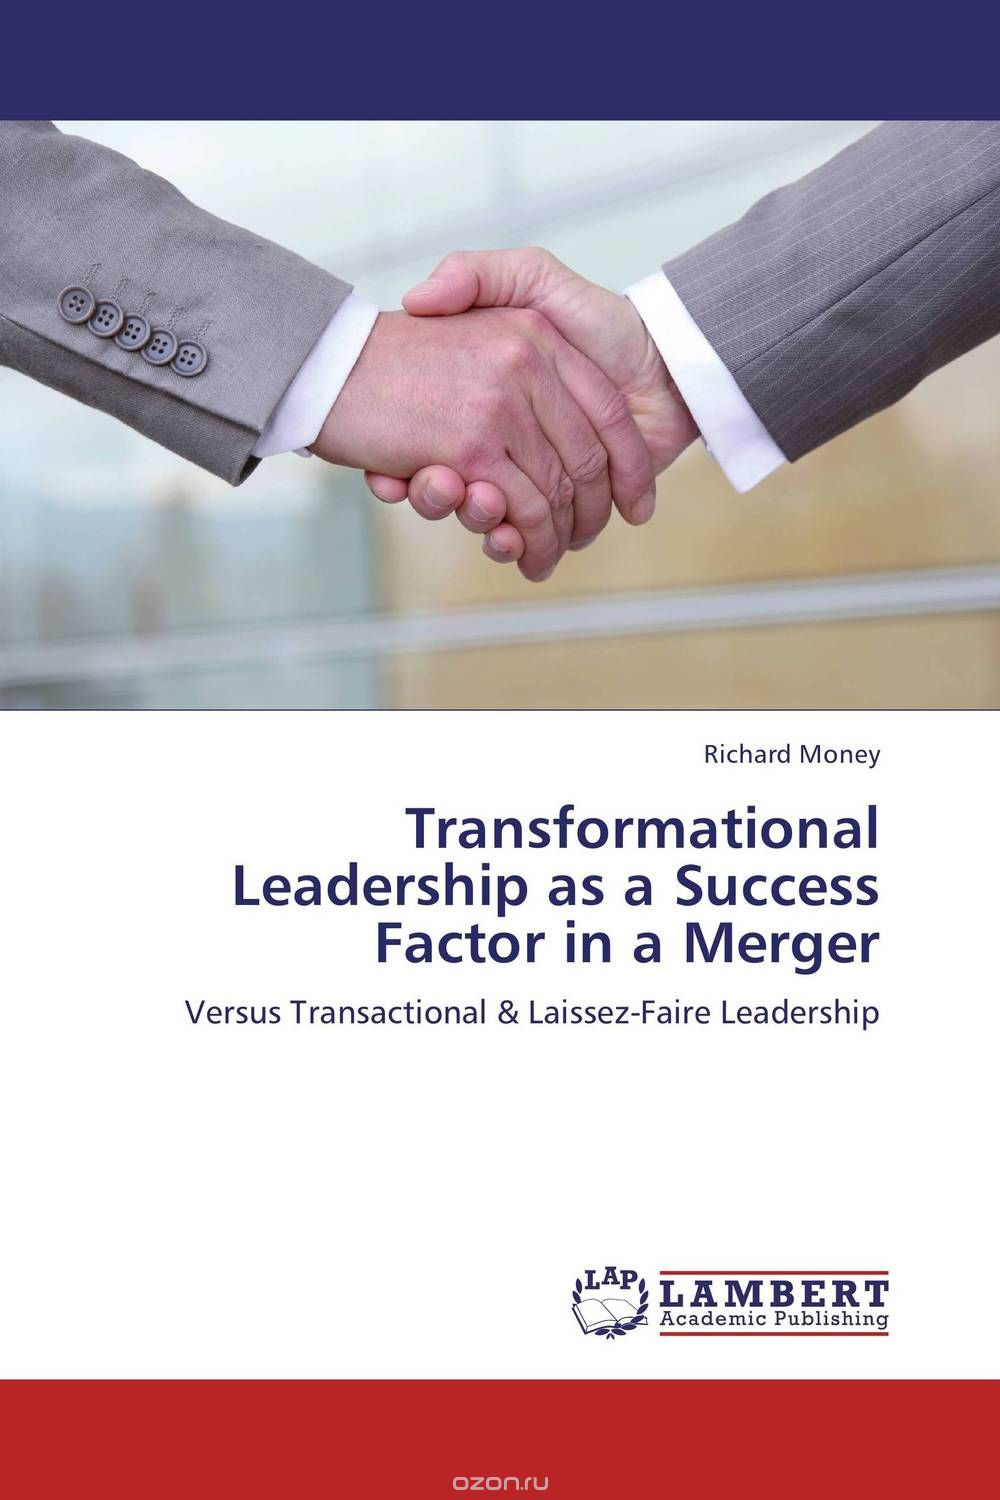 Скачать книгу "Transformational Leadership as a Success Factor in a Merger"